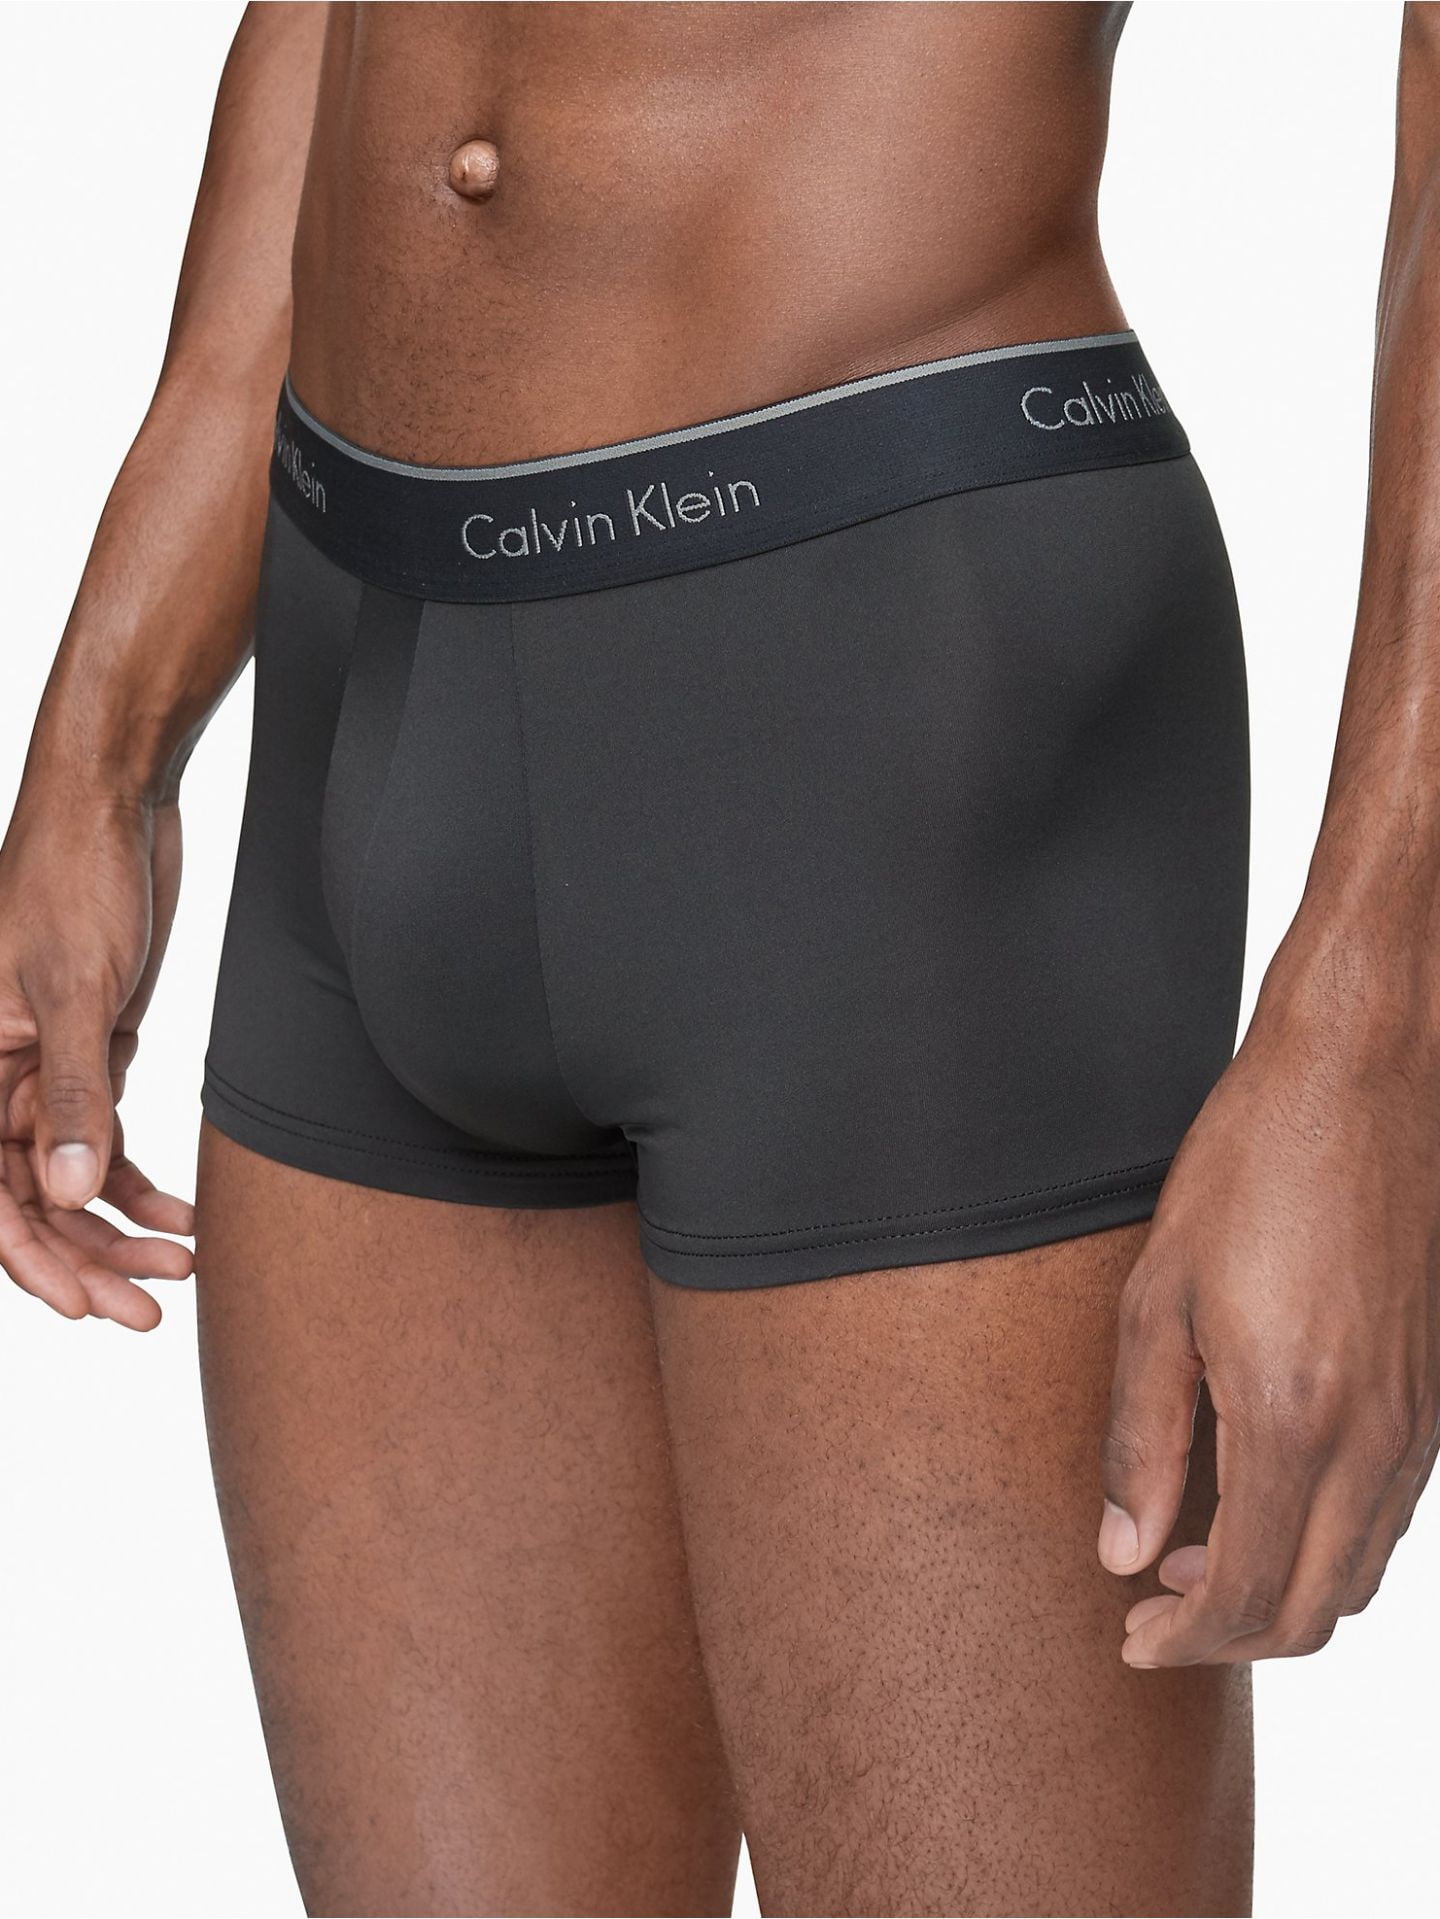 Calvin Klein Men's Micro Stretch Low Rise Trunk - 3 Pack, Black, Small -  